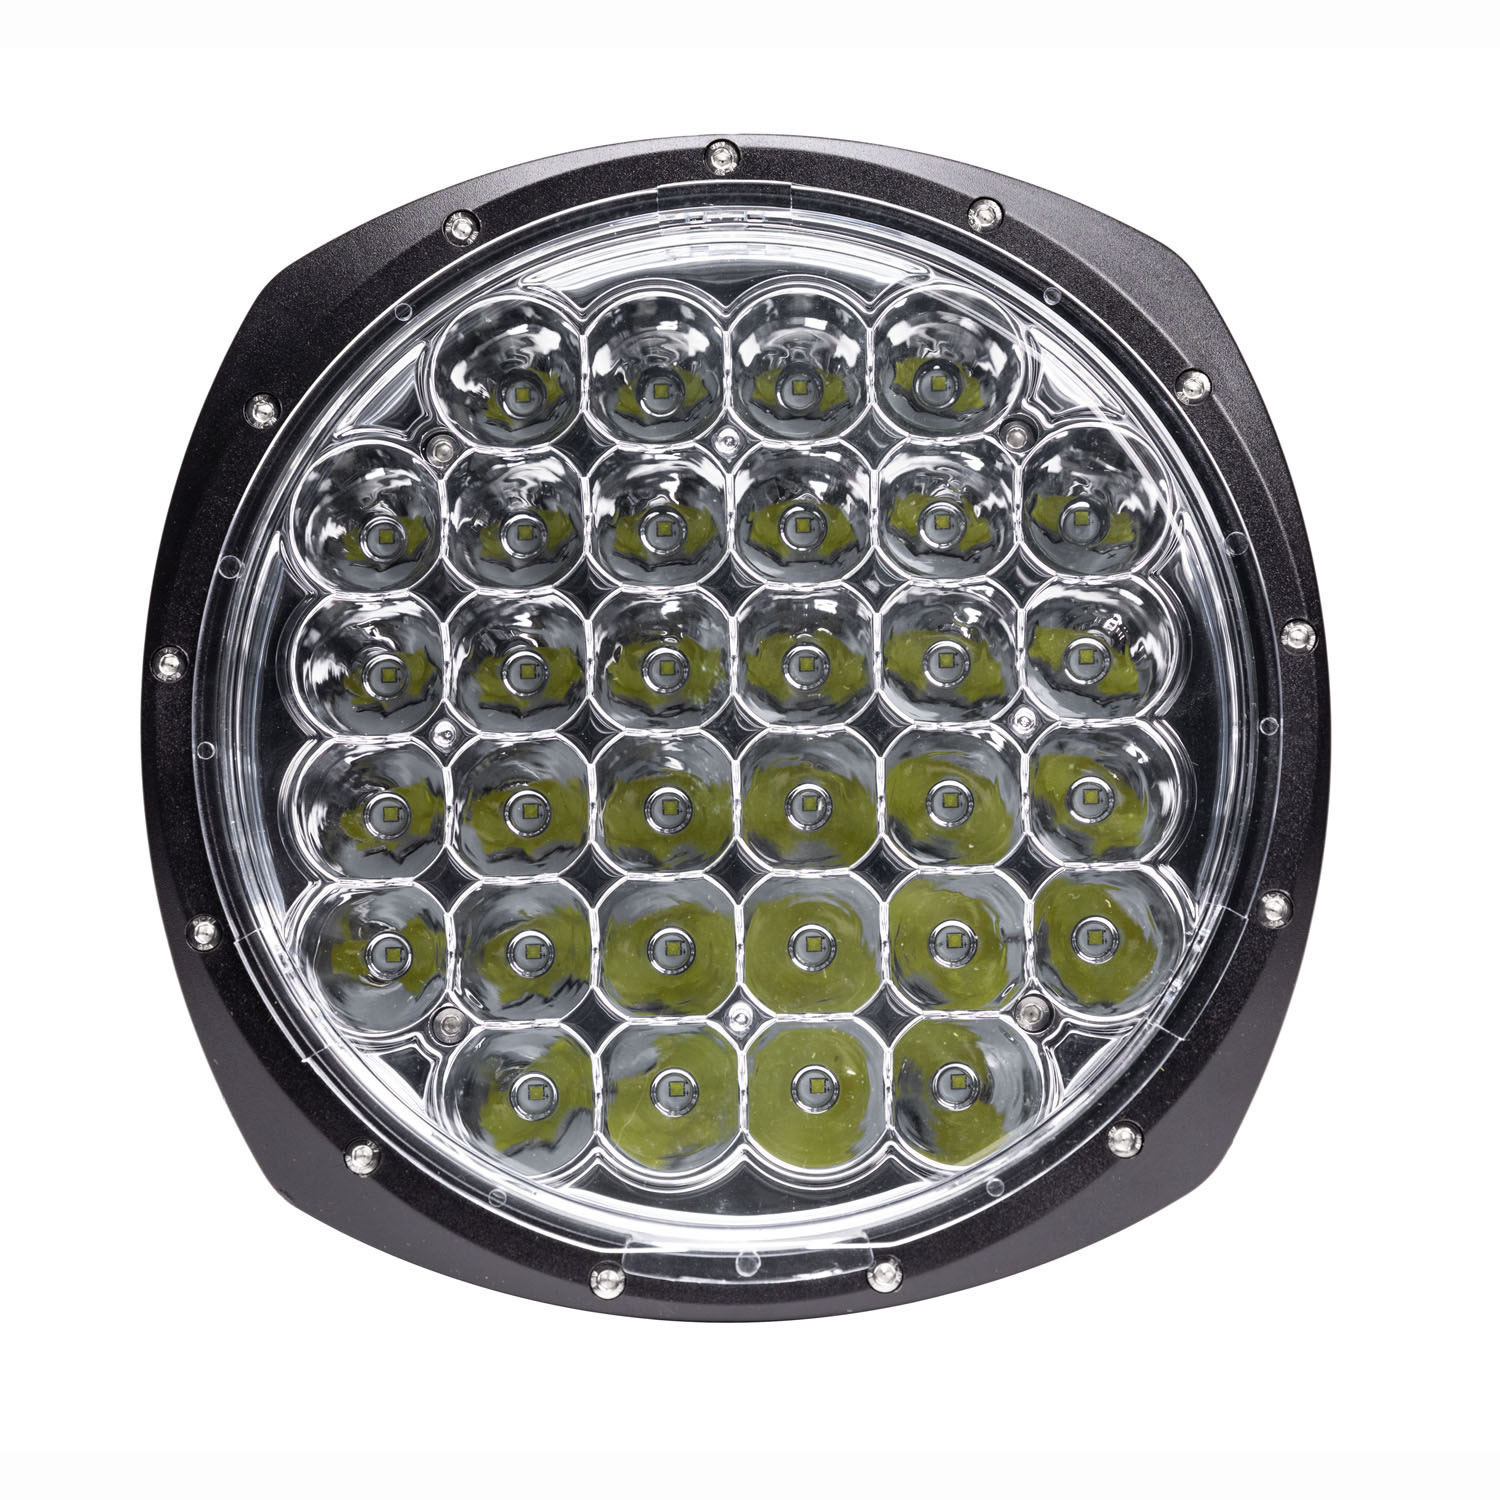 ATO9RV1 Round LED Lights - 9 Inch